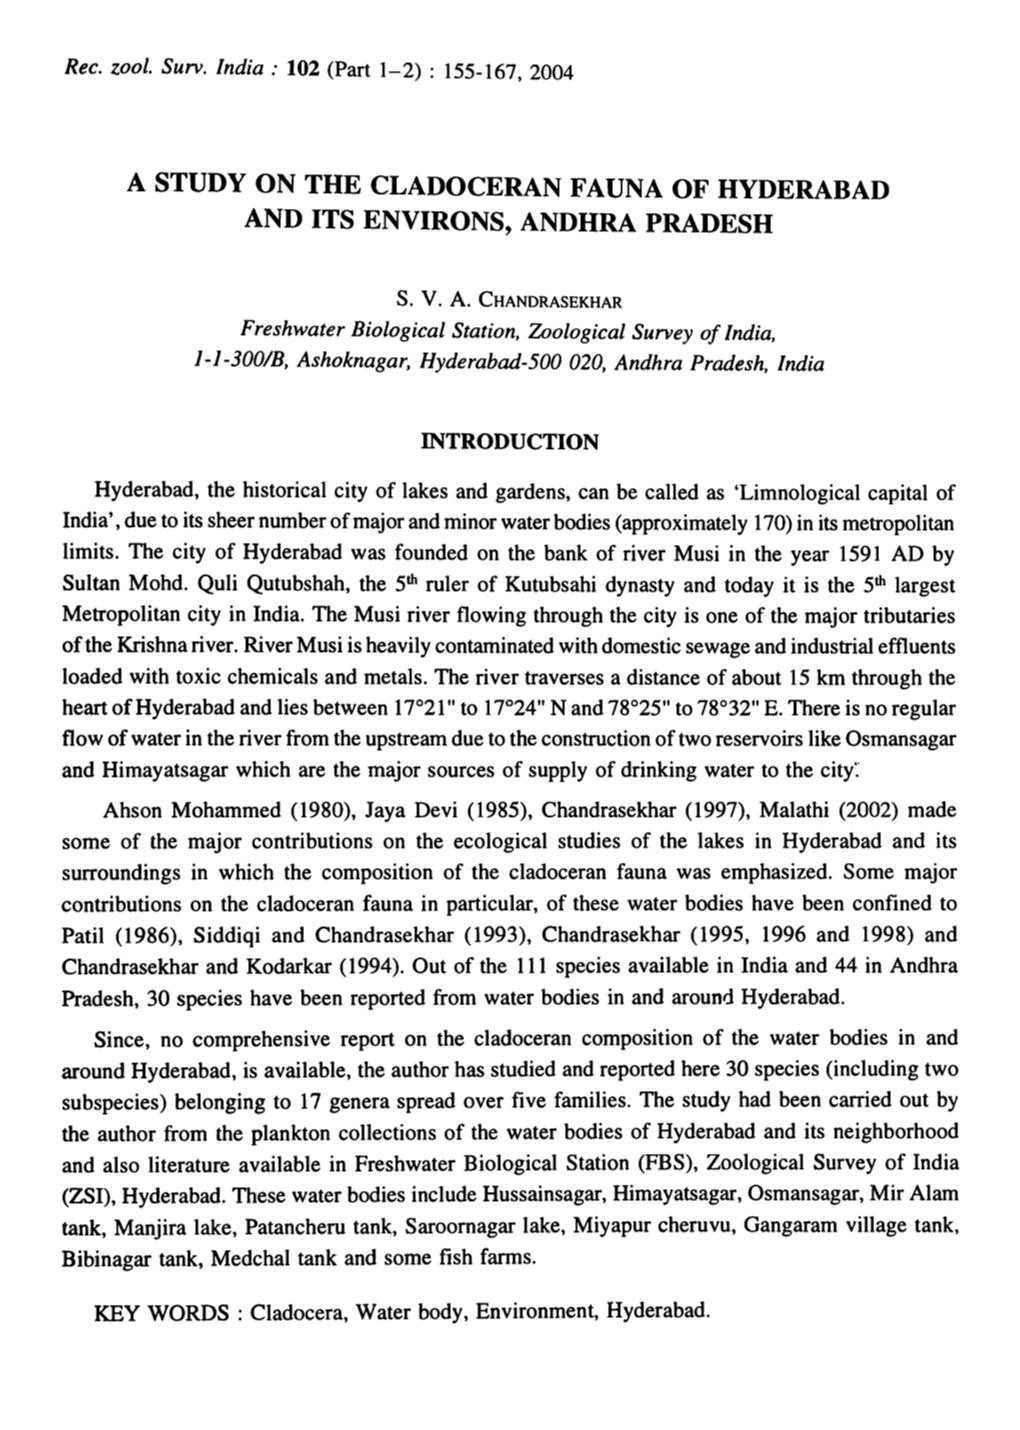 A Study on the Cladoceran Fauna of Hyderabad and Its Environs, Andhra Pradesh